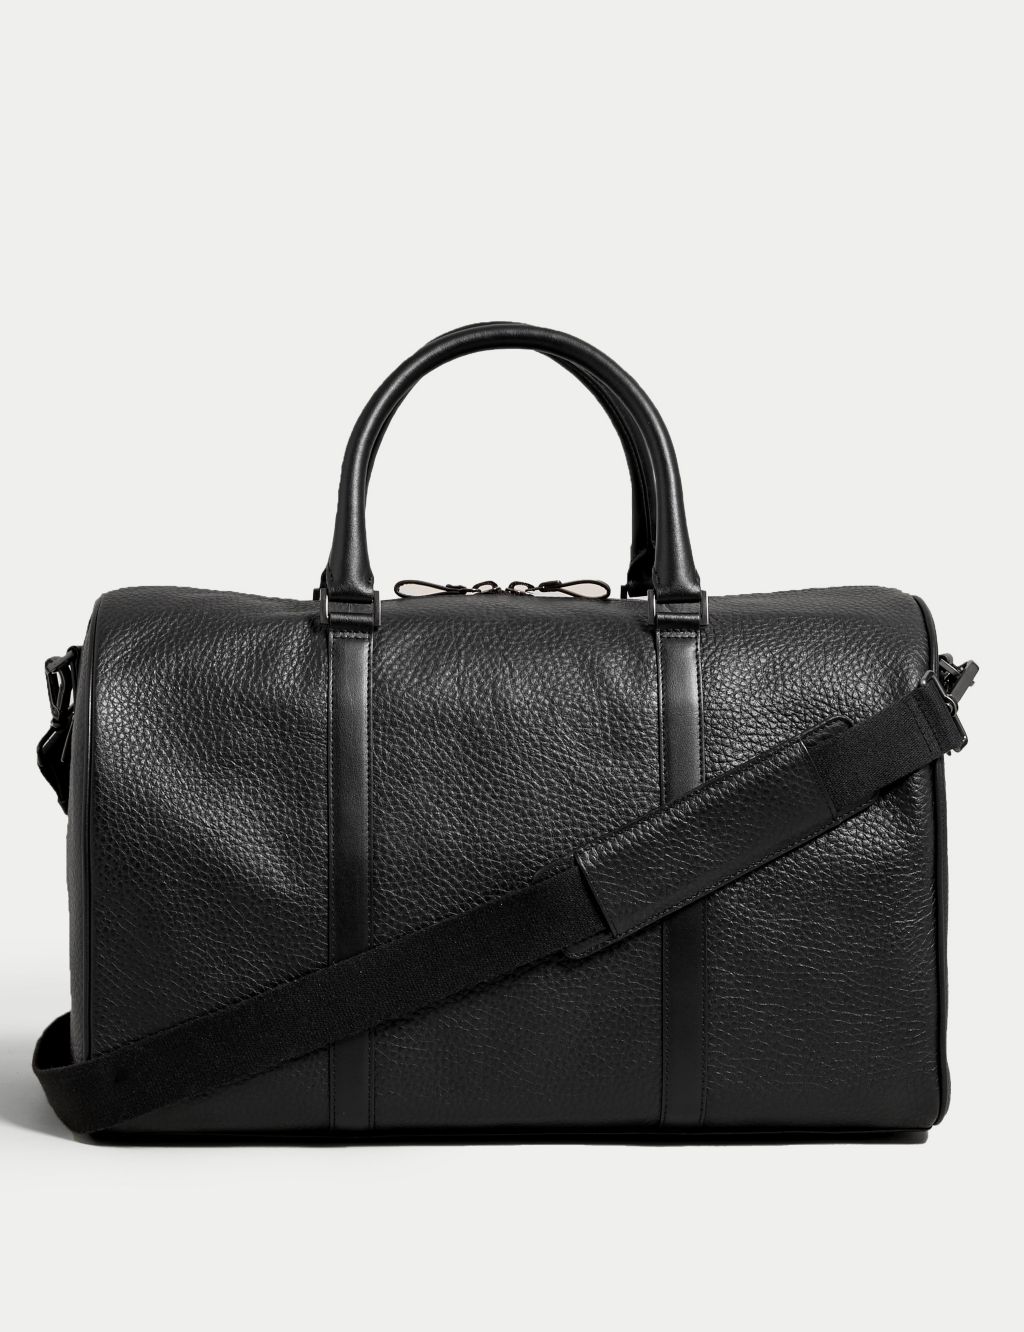 Leather Weekend Bag image 1